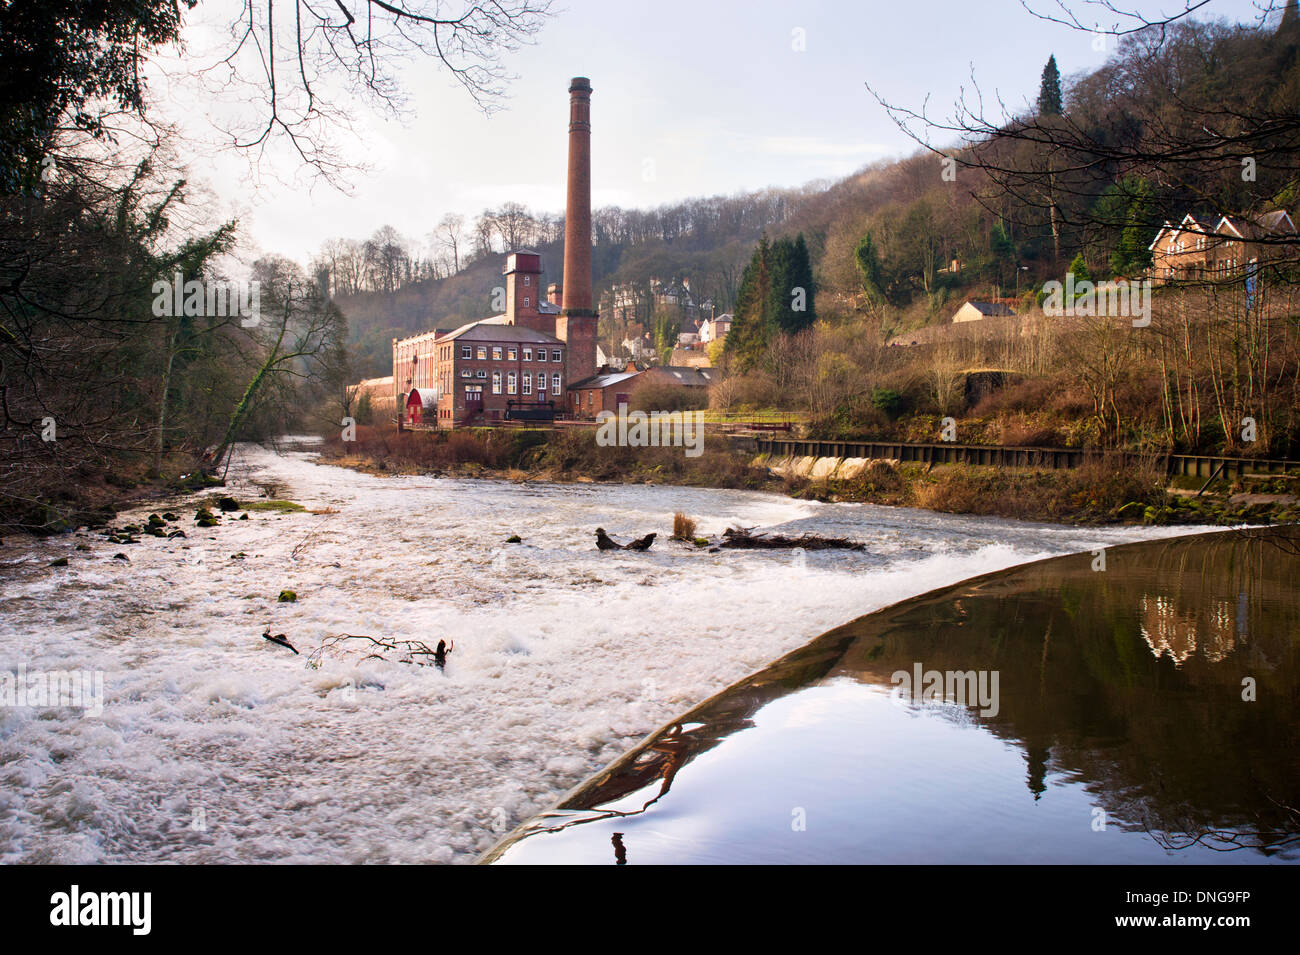 Masson Mill, Derwent Valley Mills, Site du patrimoine mondial de Cromford, Derbyshire, Angleterre, RU Banque D'Images